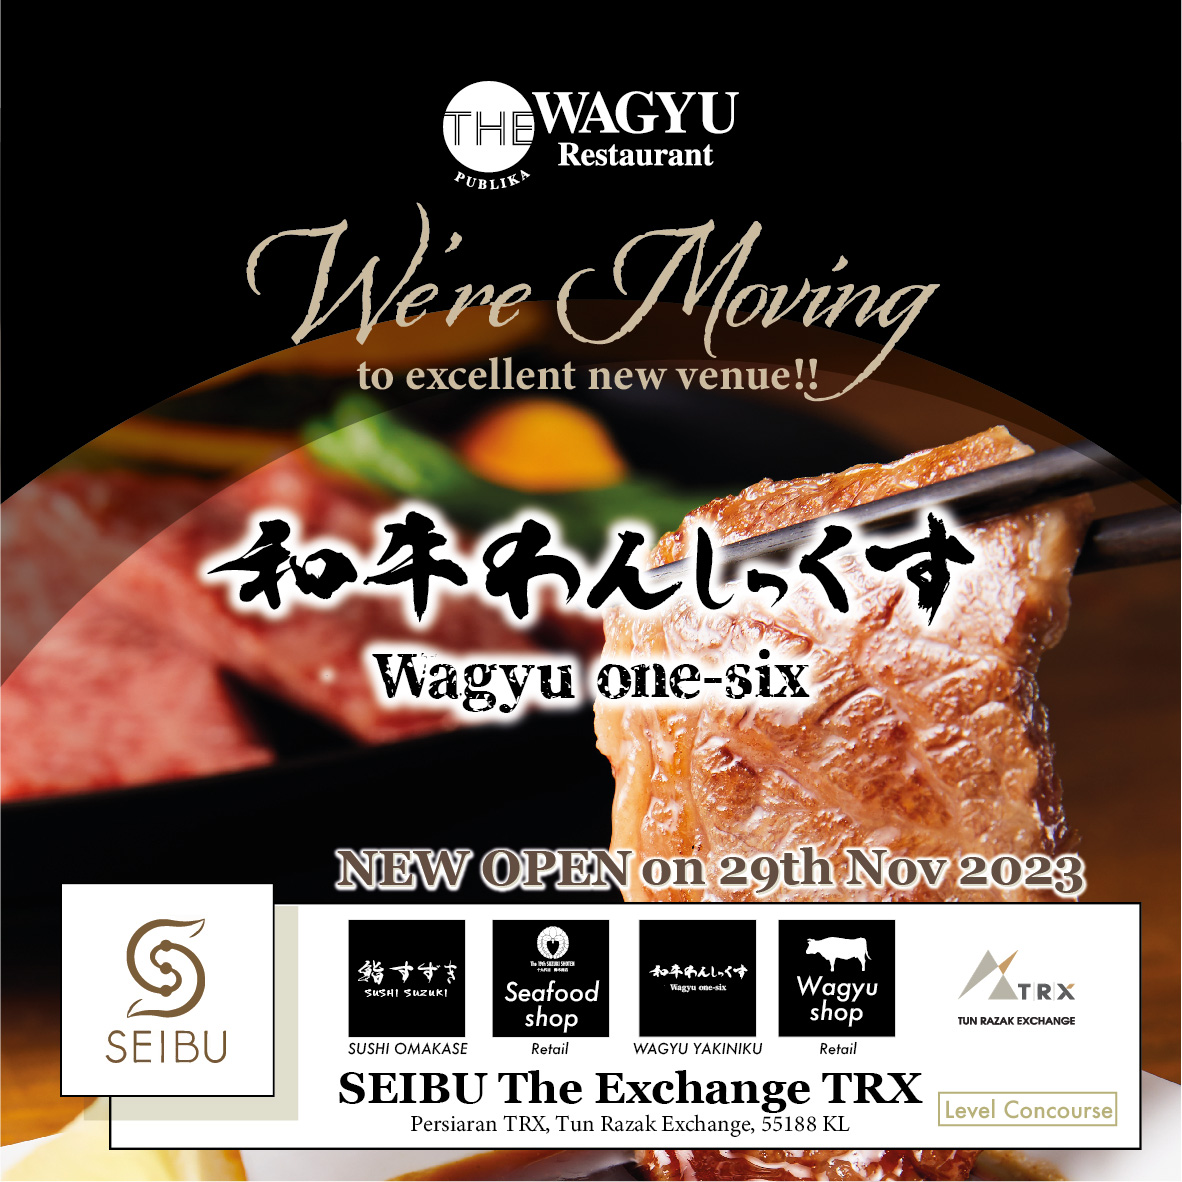 THE WAGYU Restaurant Publika shop is moving to SEIBU TRX!